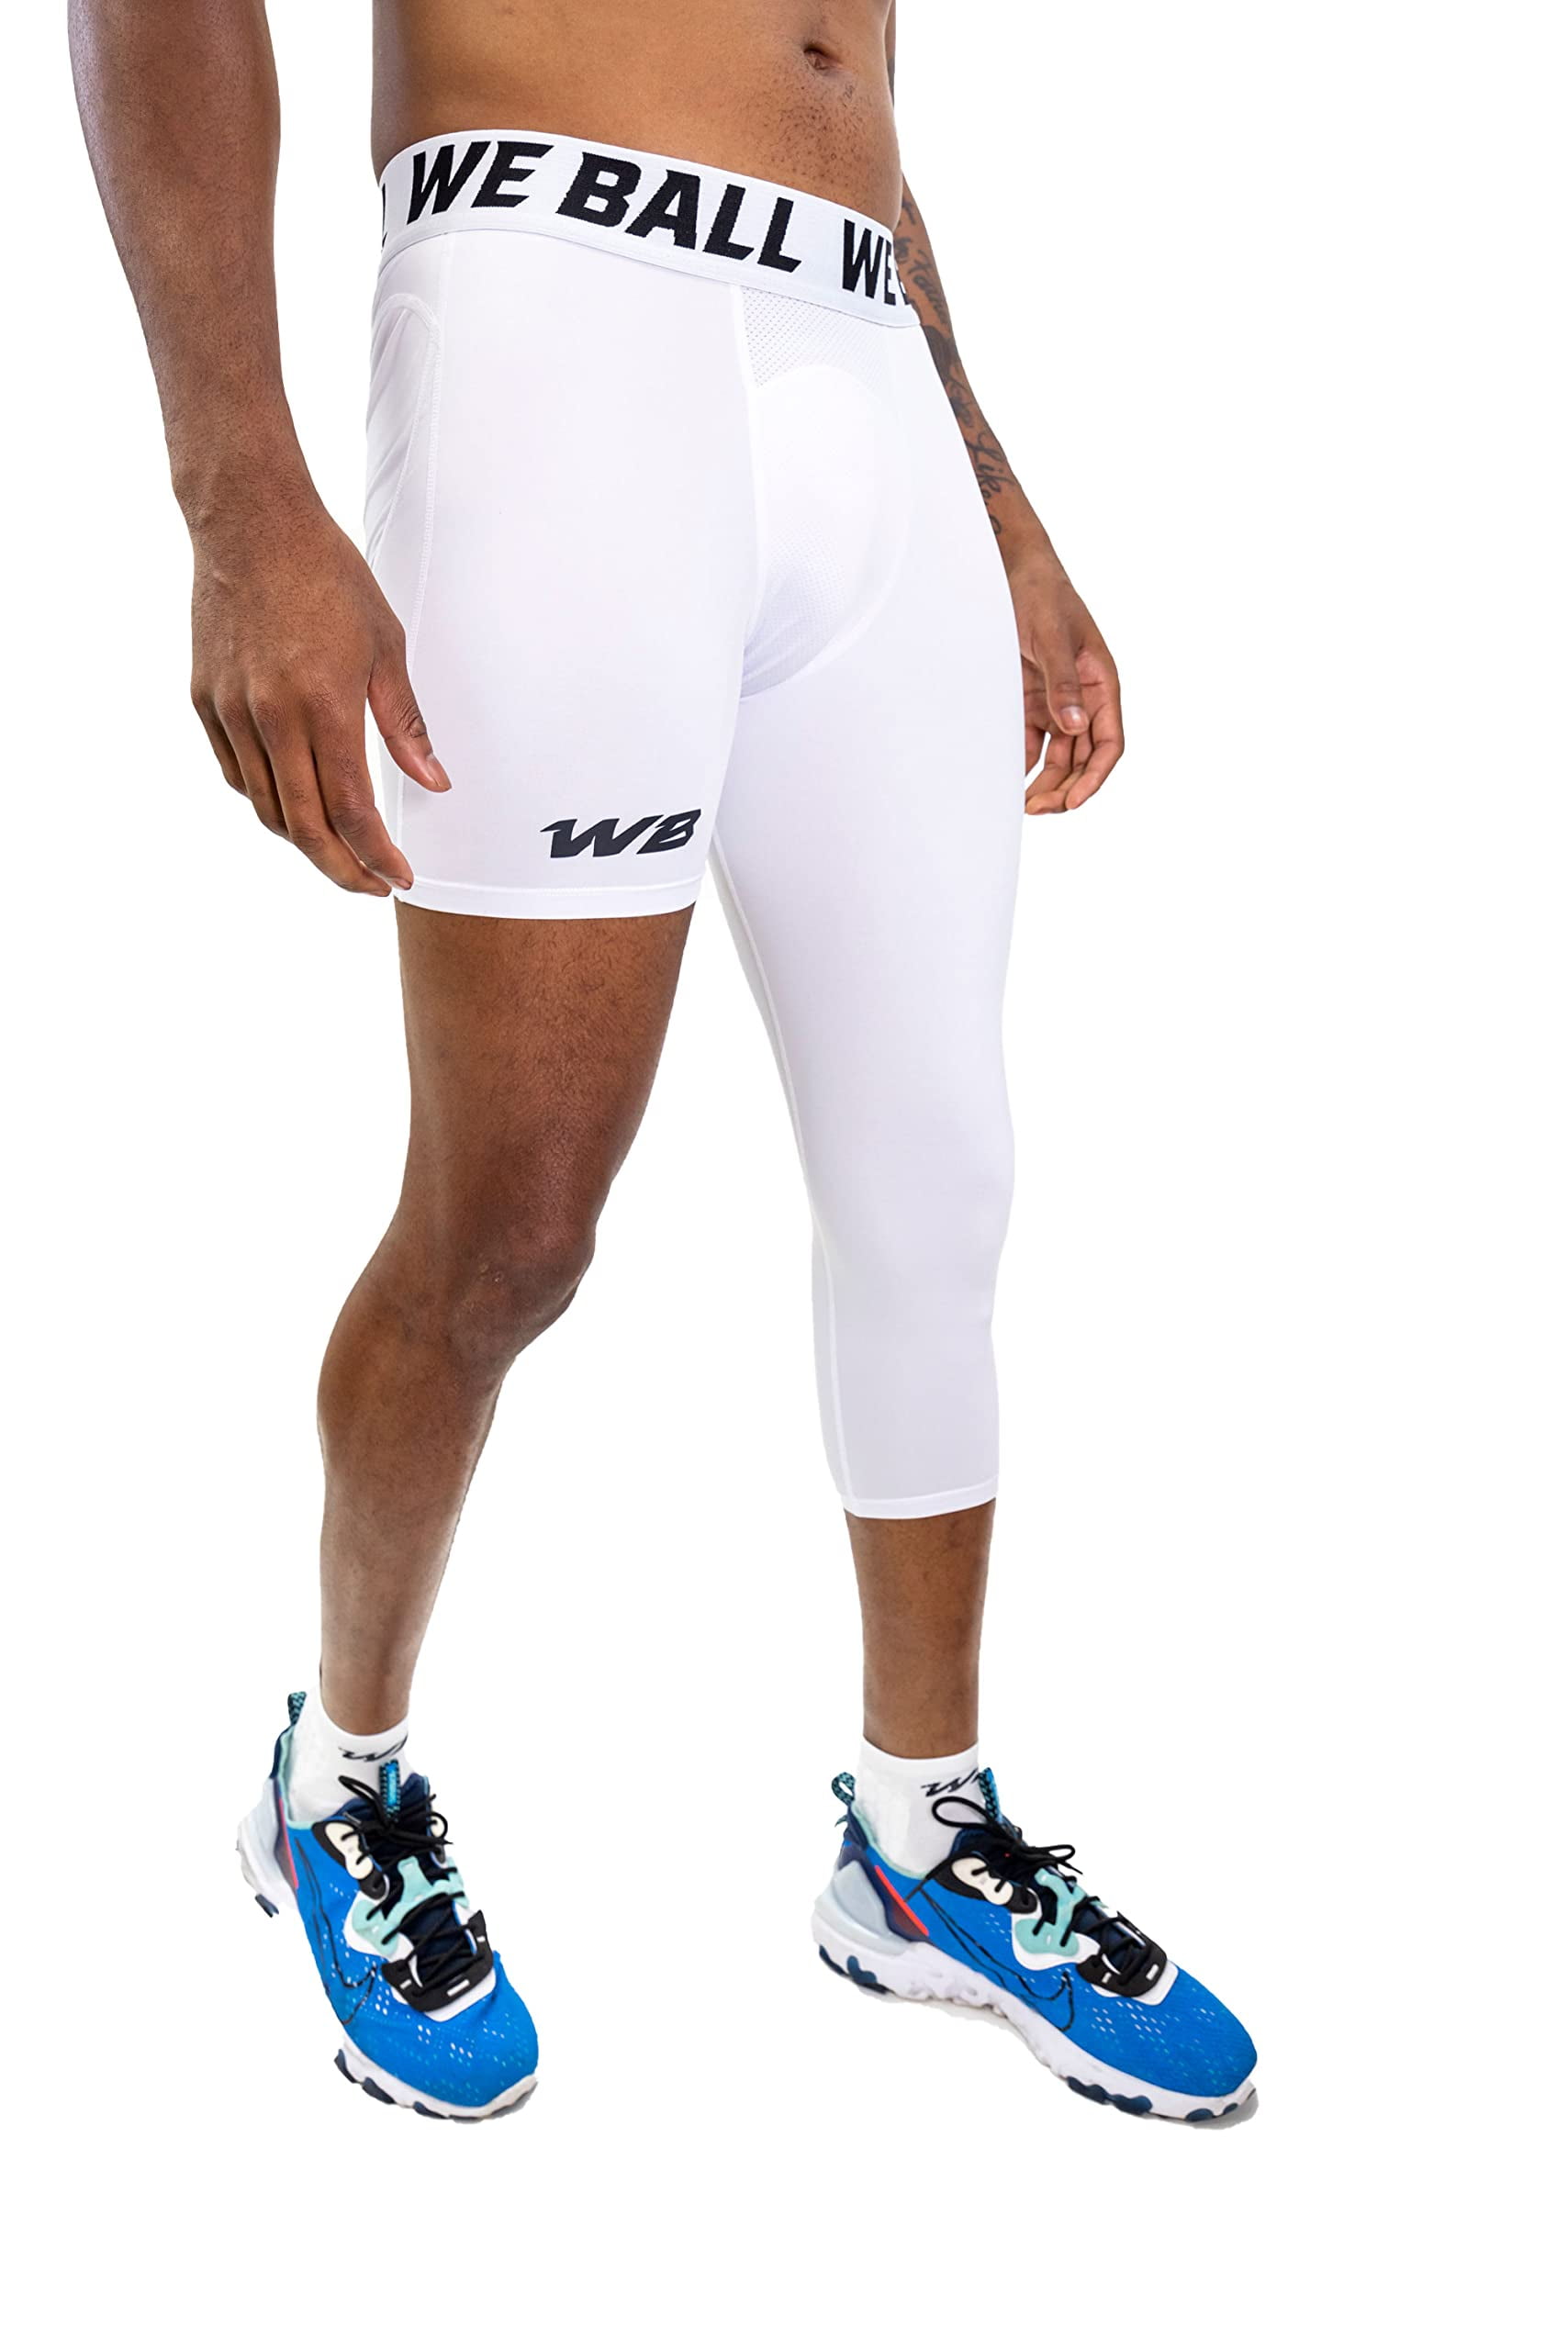 Men's 3/4 Compression Pants One Leg Tights Athletic Base Layer Basketball L  ZDP1 W2C7 